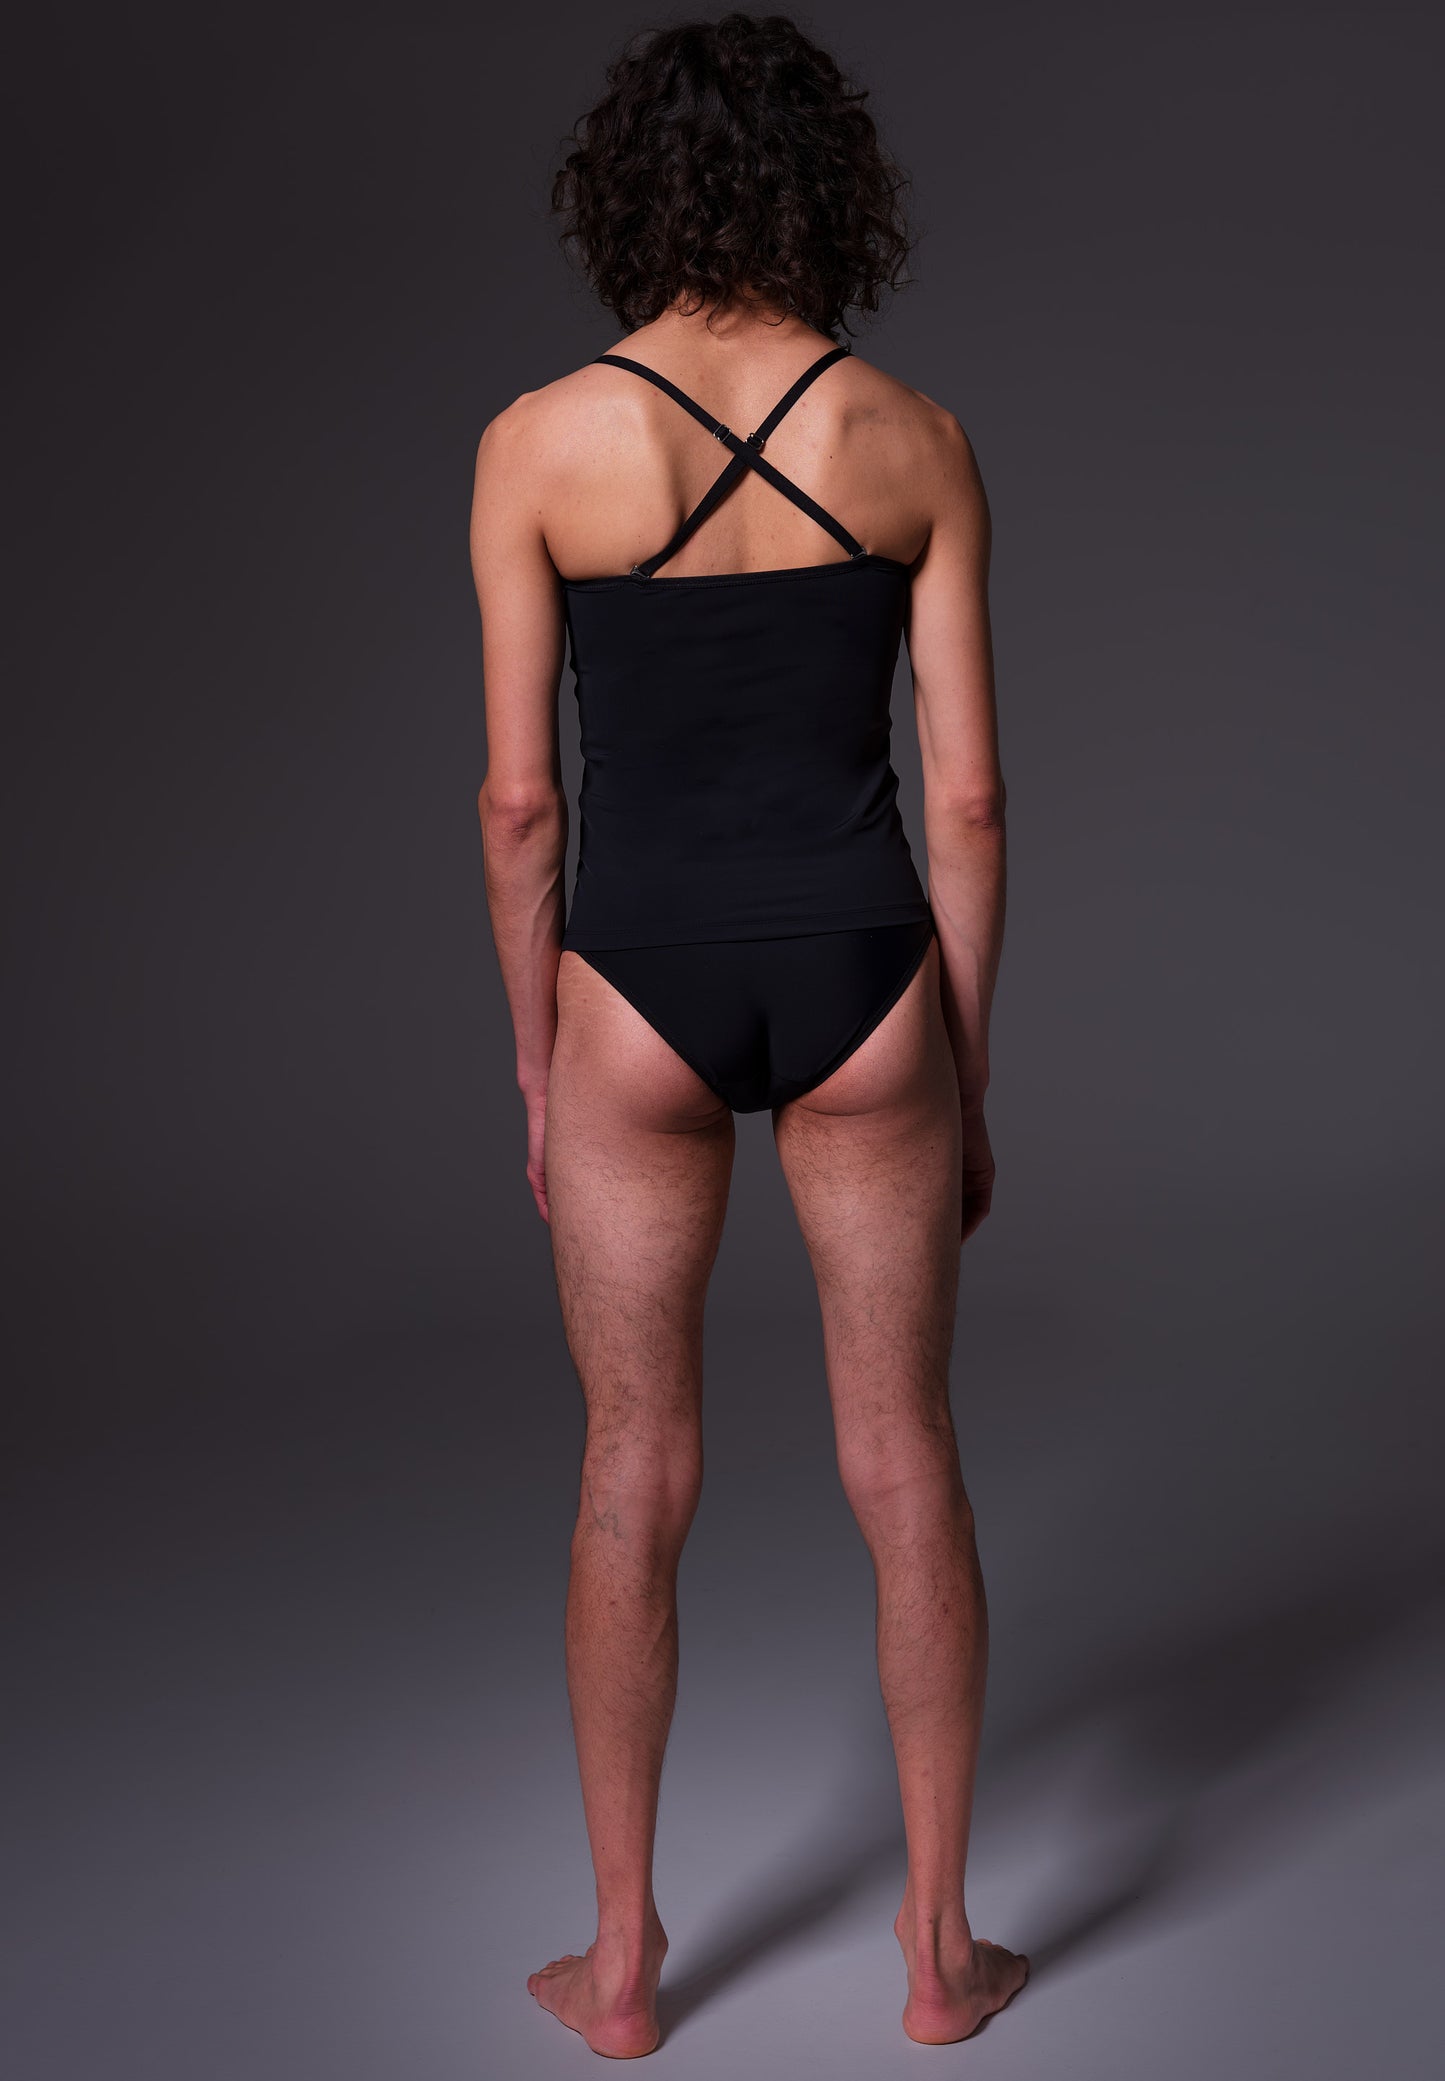 Bikini Singlet Advanced black, seen from the back on model Riah